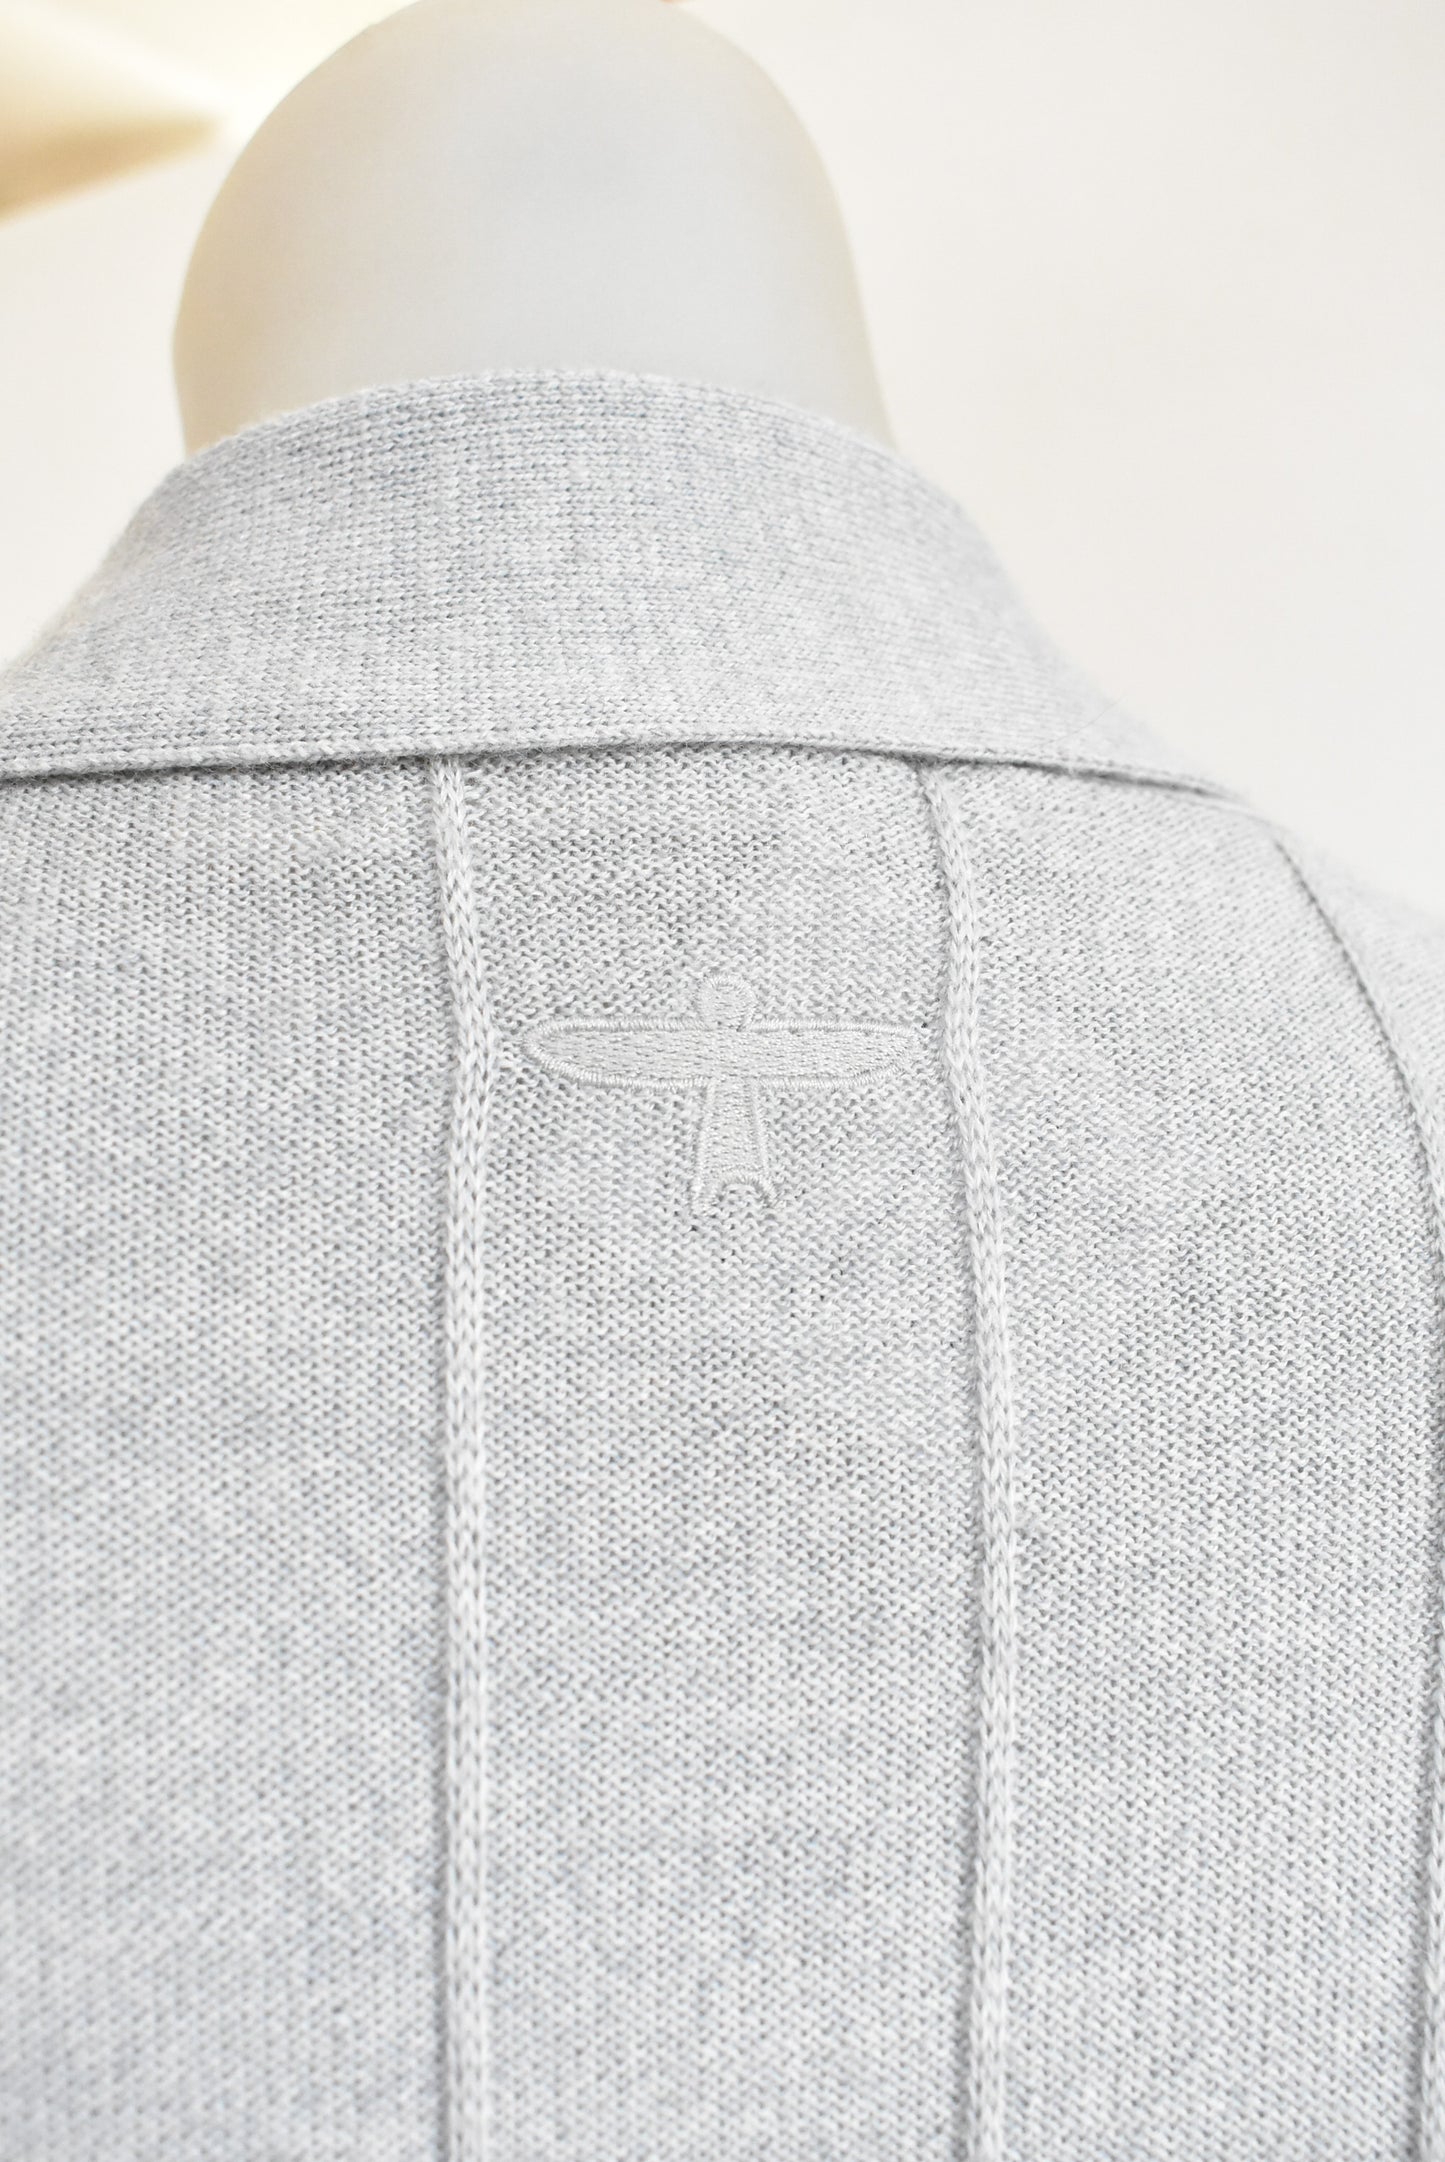 Untouched World ethically made 100% merino wool cardigan, size M